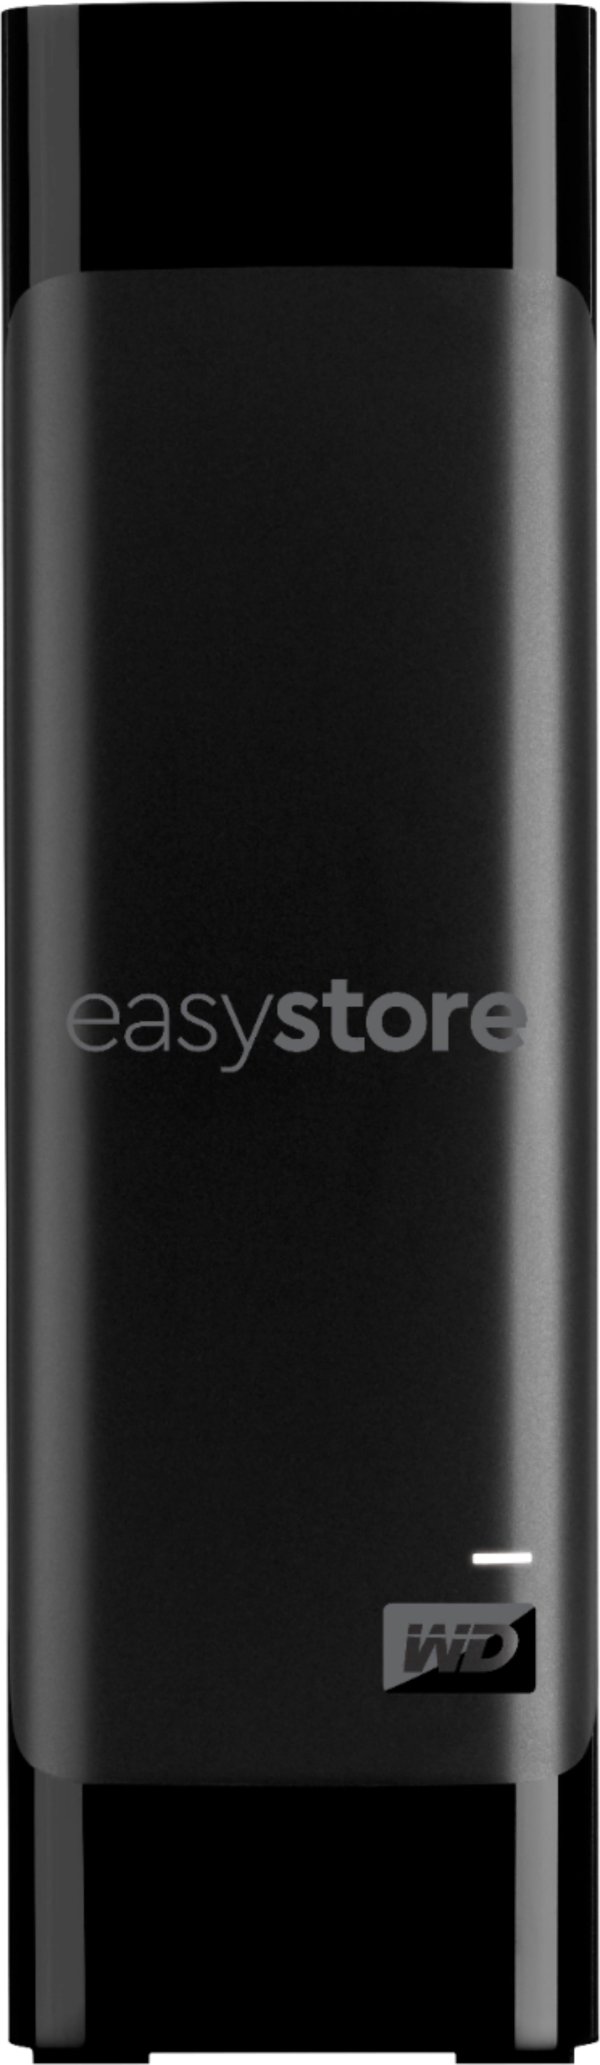 WD easystore 18TB External USB 3.0 Hard Drive